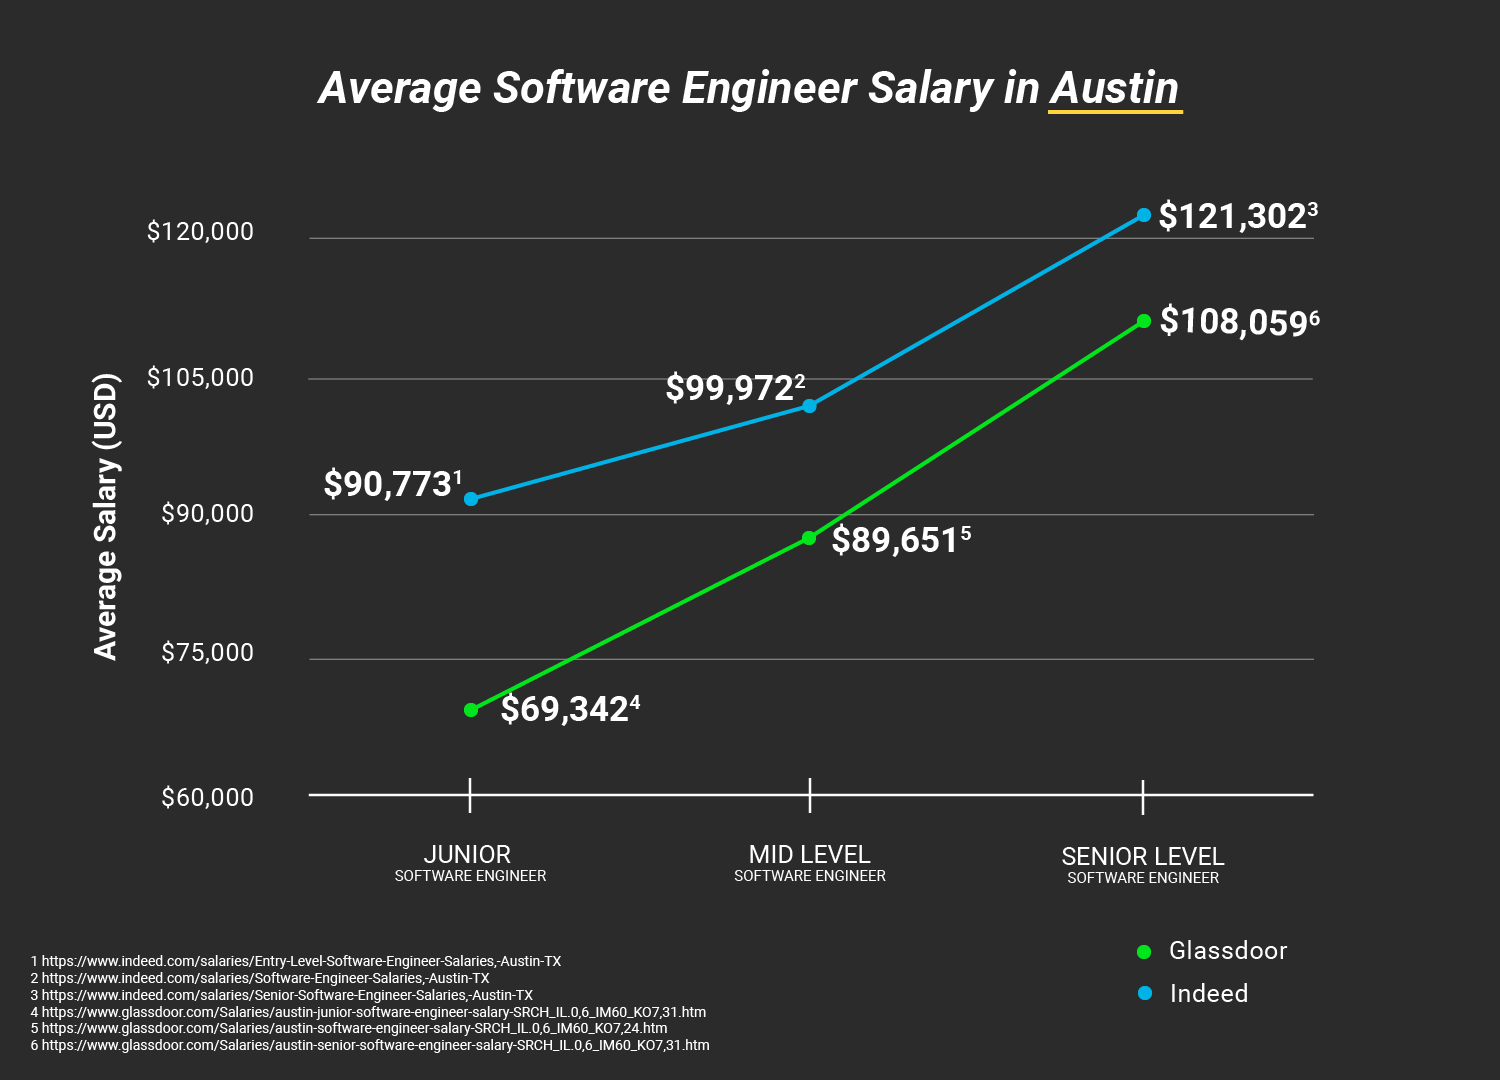 average technical writer salary texas